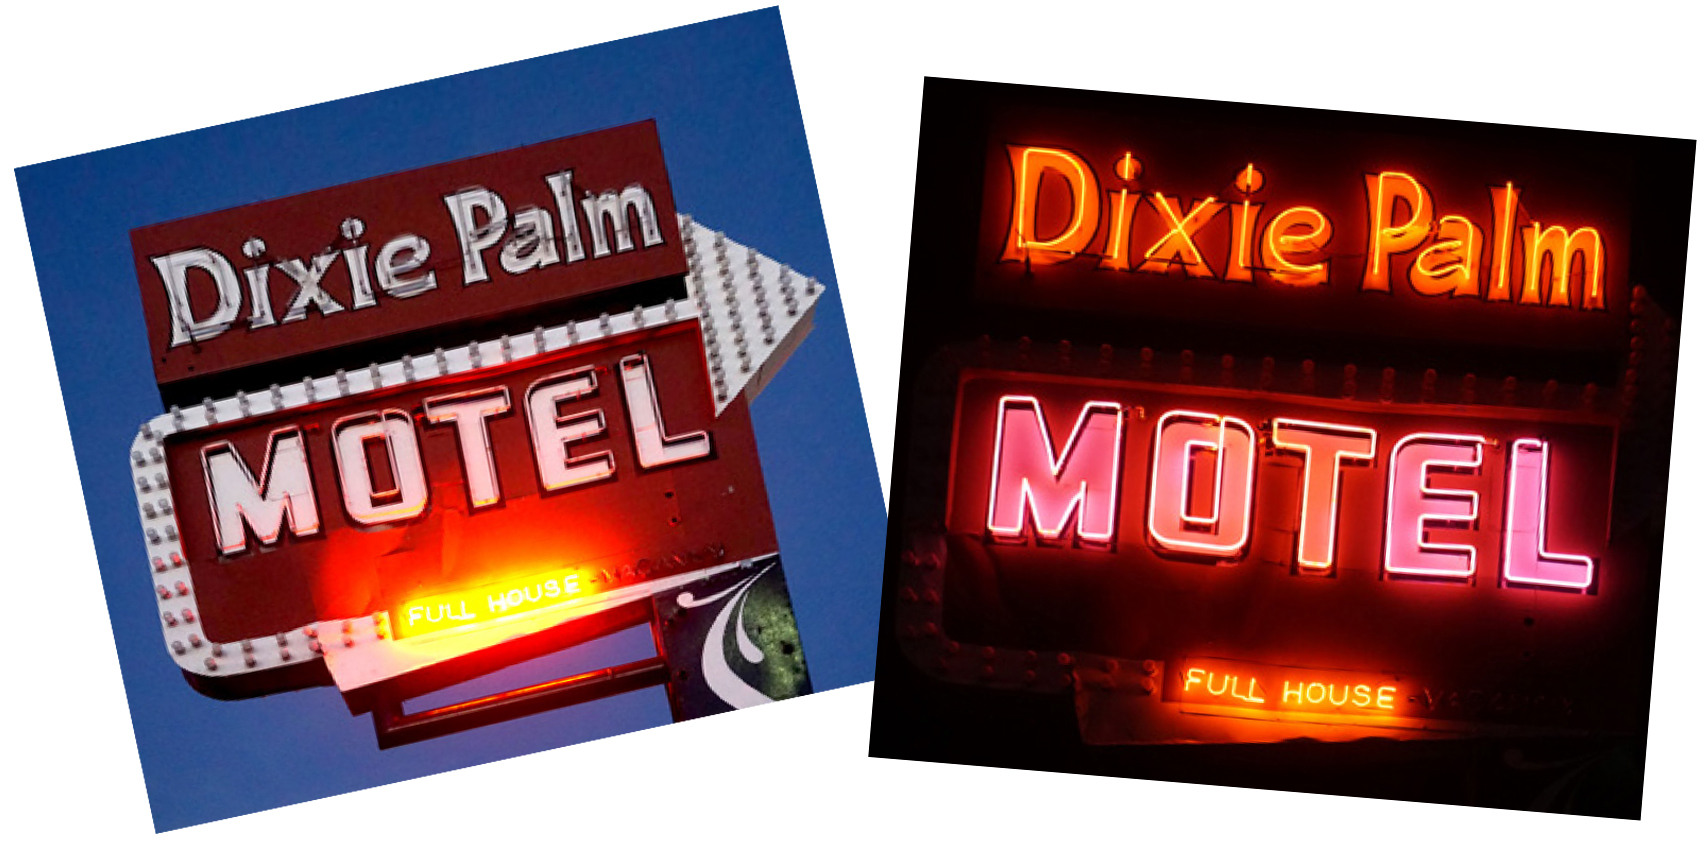 Dixie Palm Motel neon sign, St. George, Utah